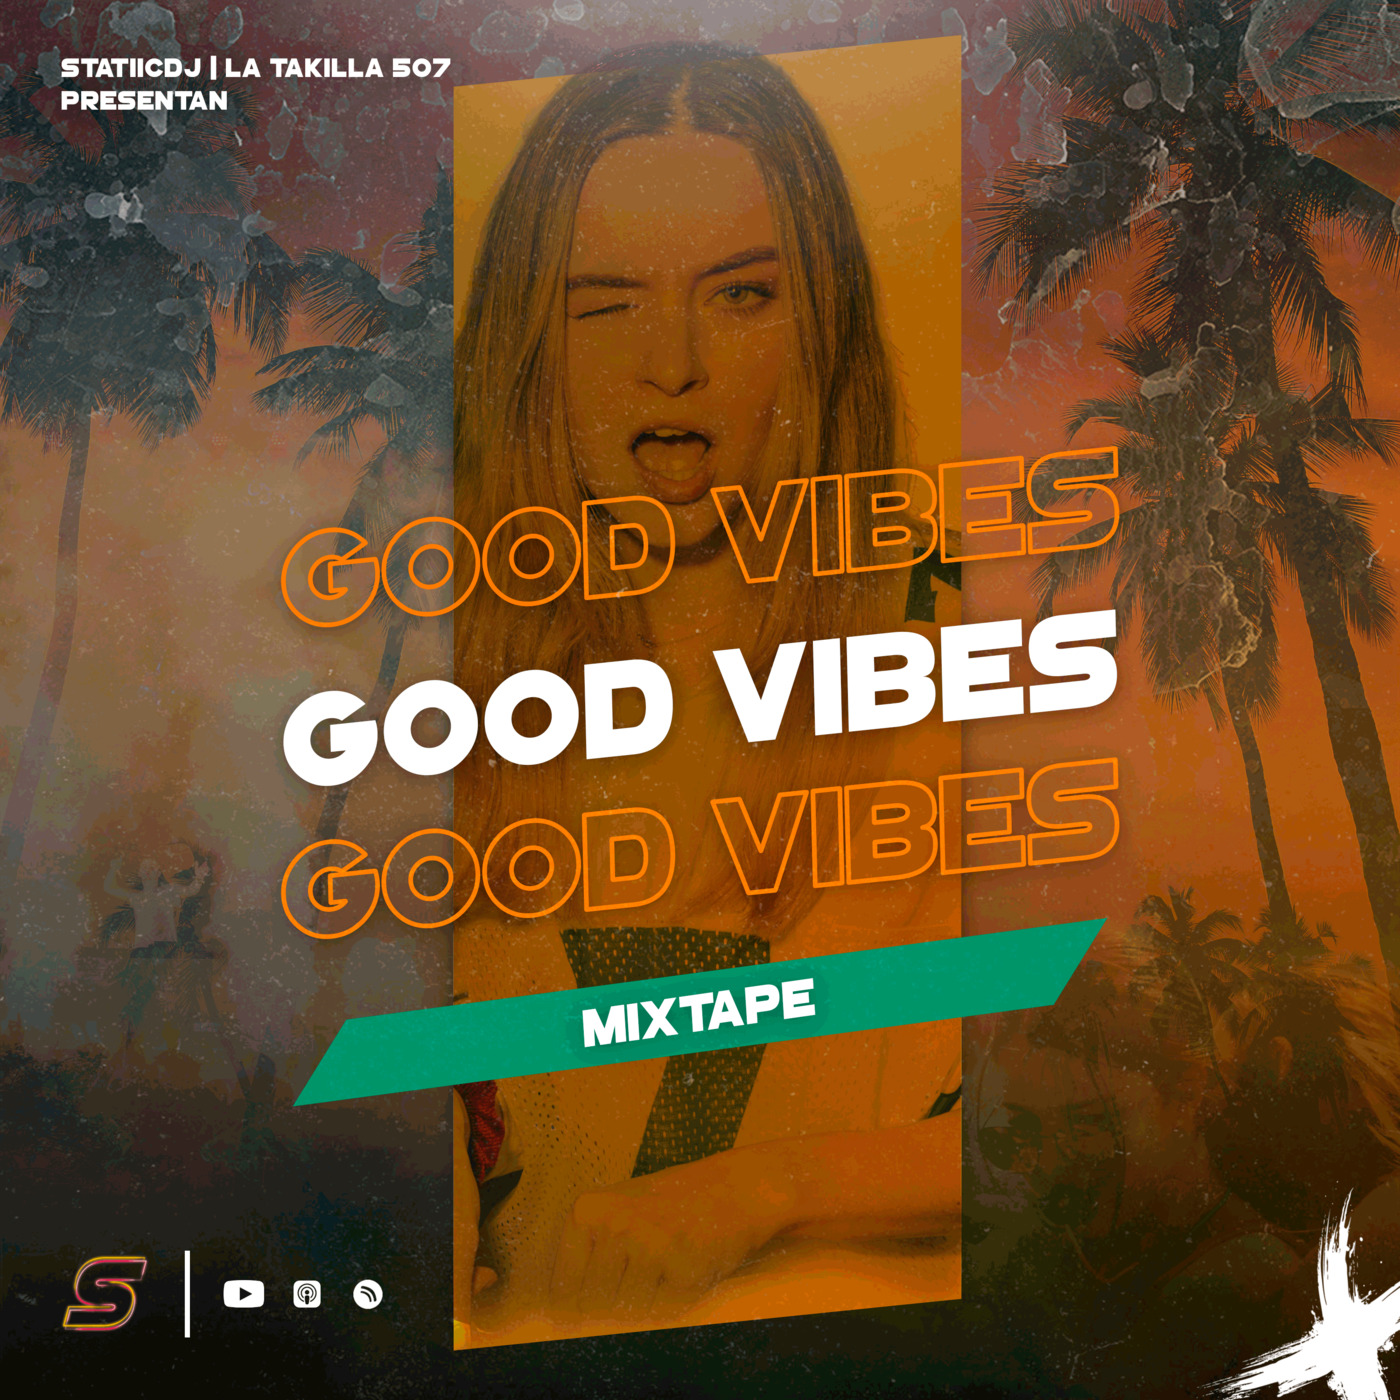 Good Vibes Mixtape - @statiicdj (Pop, R&B, Rock, Roots, Latino)